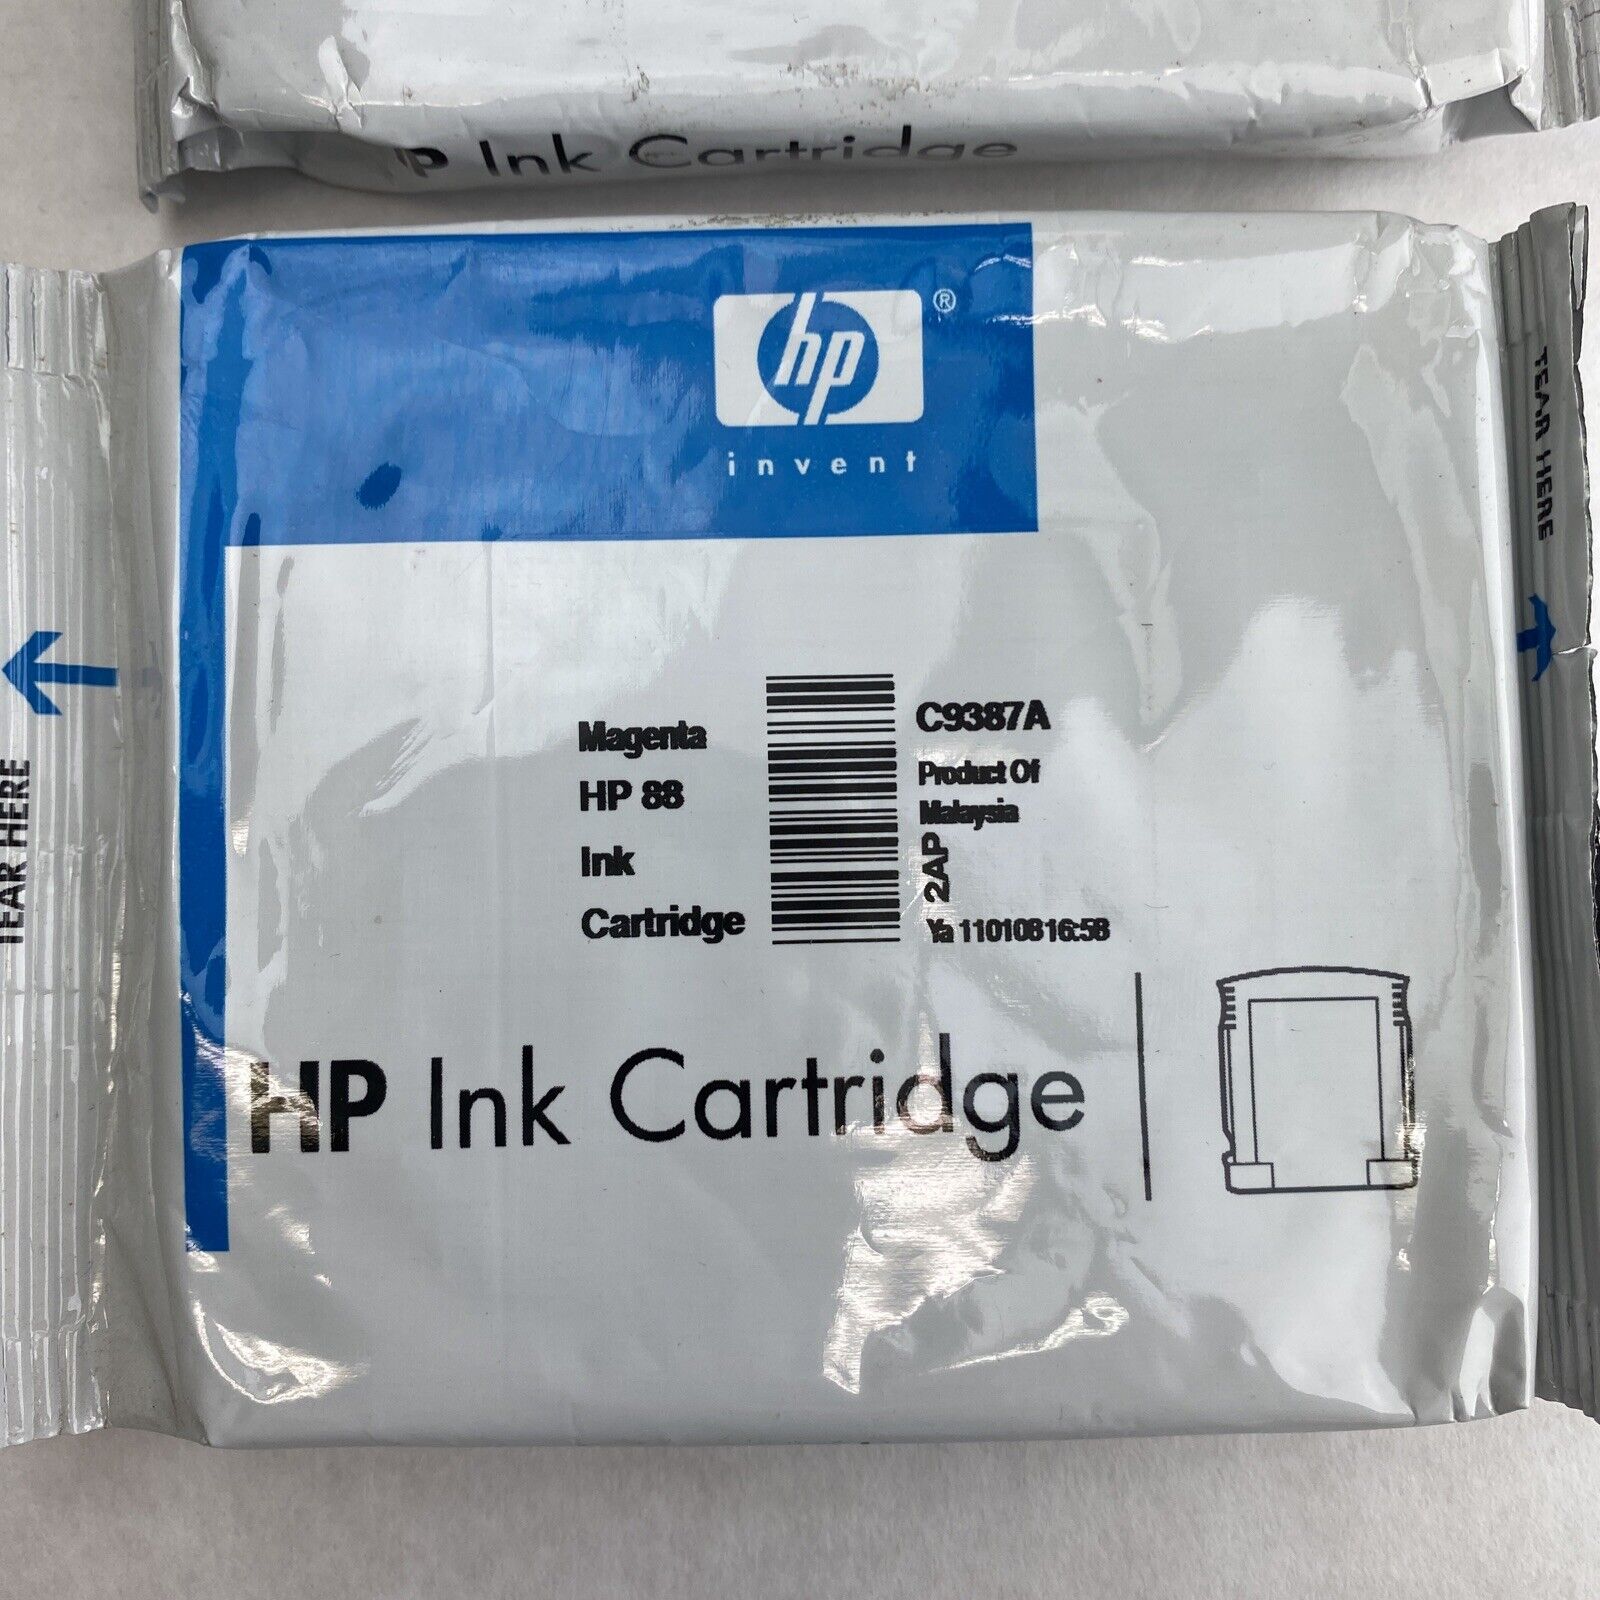 Lot of 2 HP 88 MAGENTA Ink Cartridge C9387A NOS Sealed